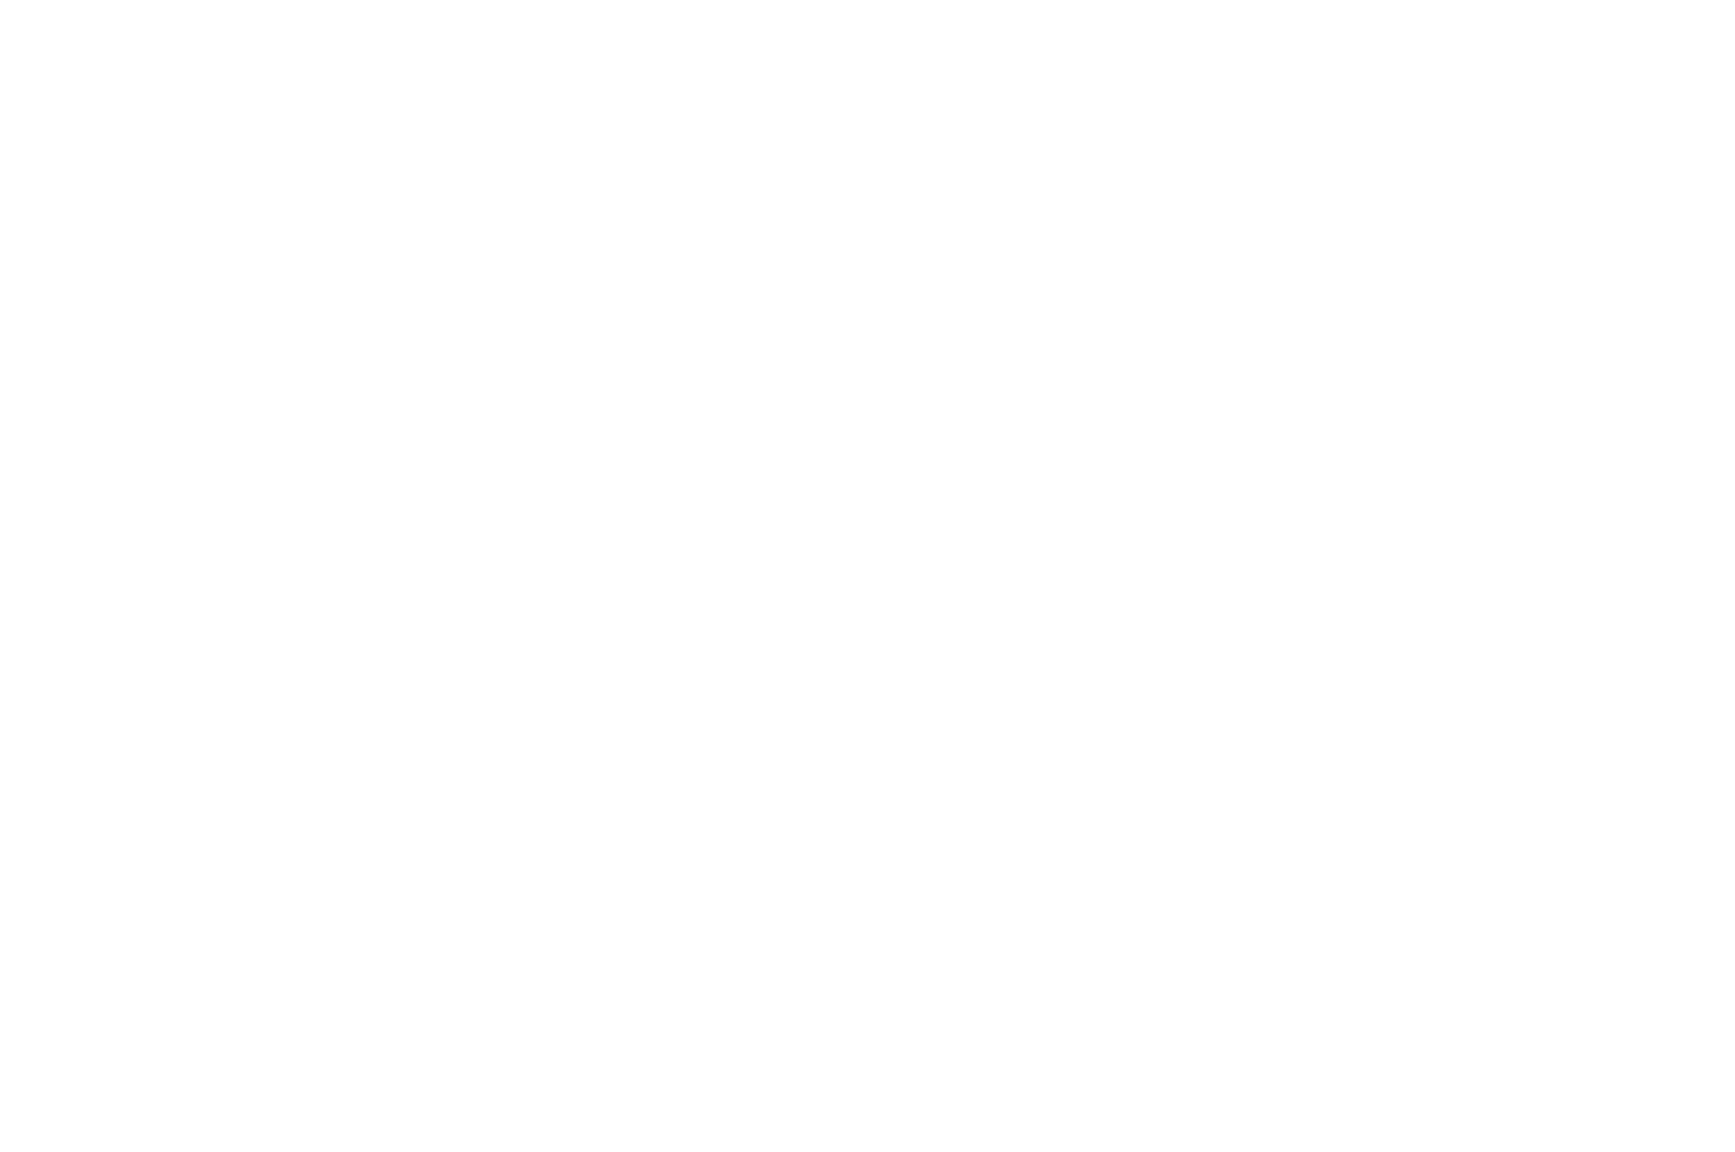 OFFICIAL SELECTION - Slash Night Film Festival - 2020.png